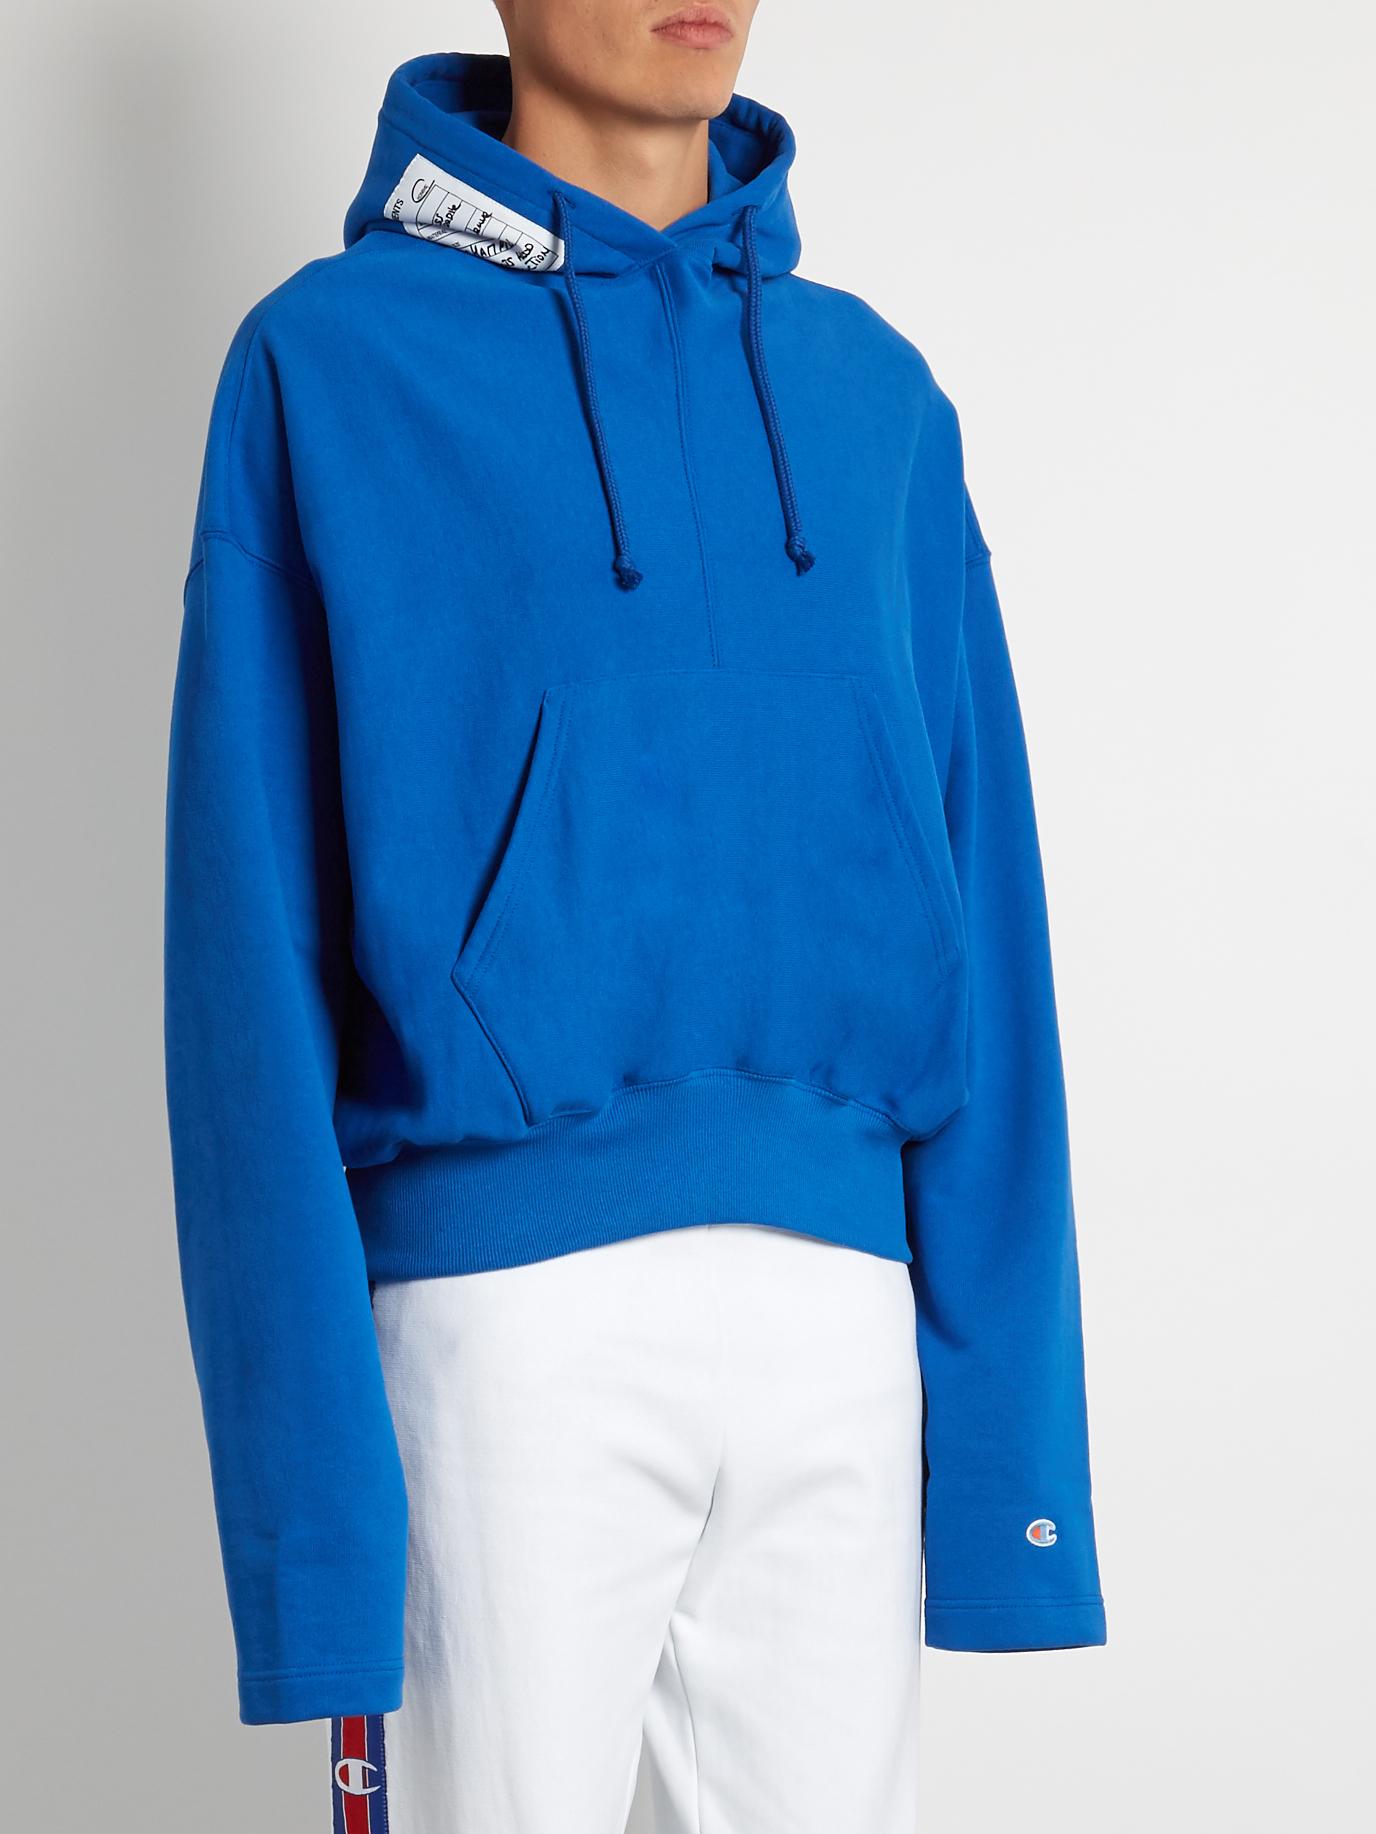 Vetements X Champion Hooded Oversized Sweatshirt in Blue for Men | Lyst